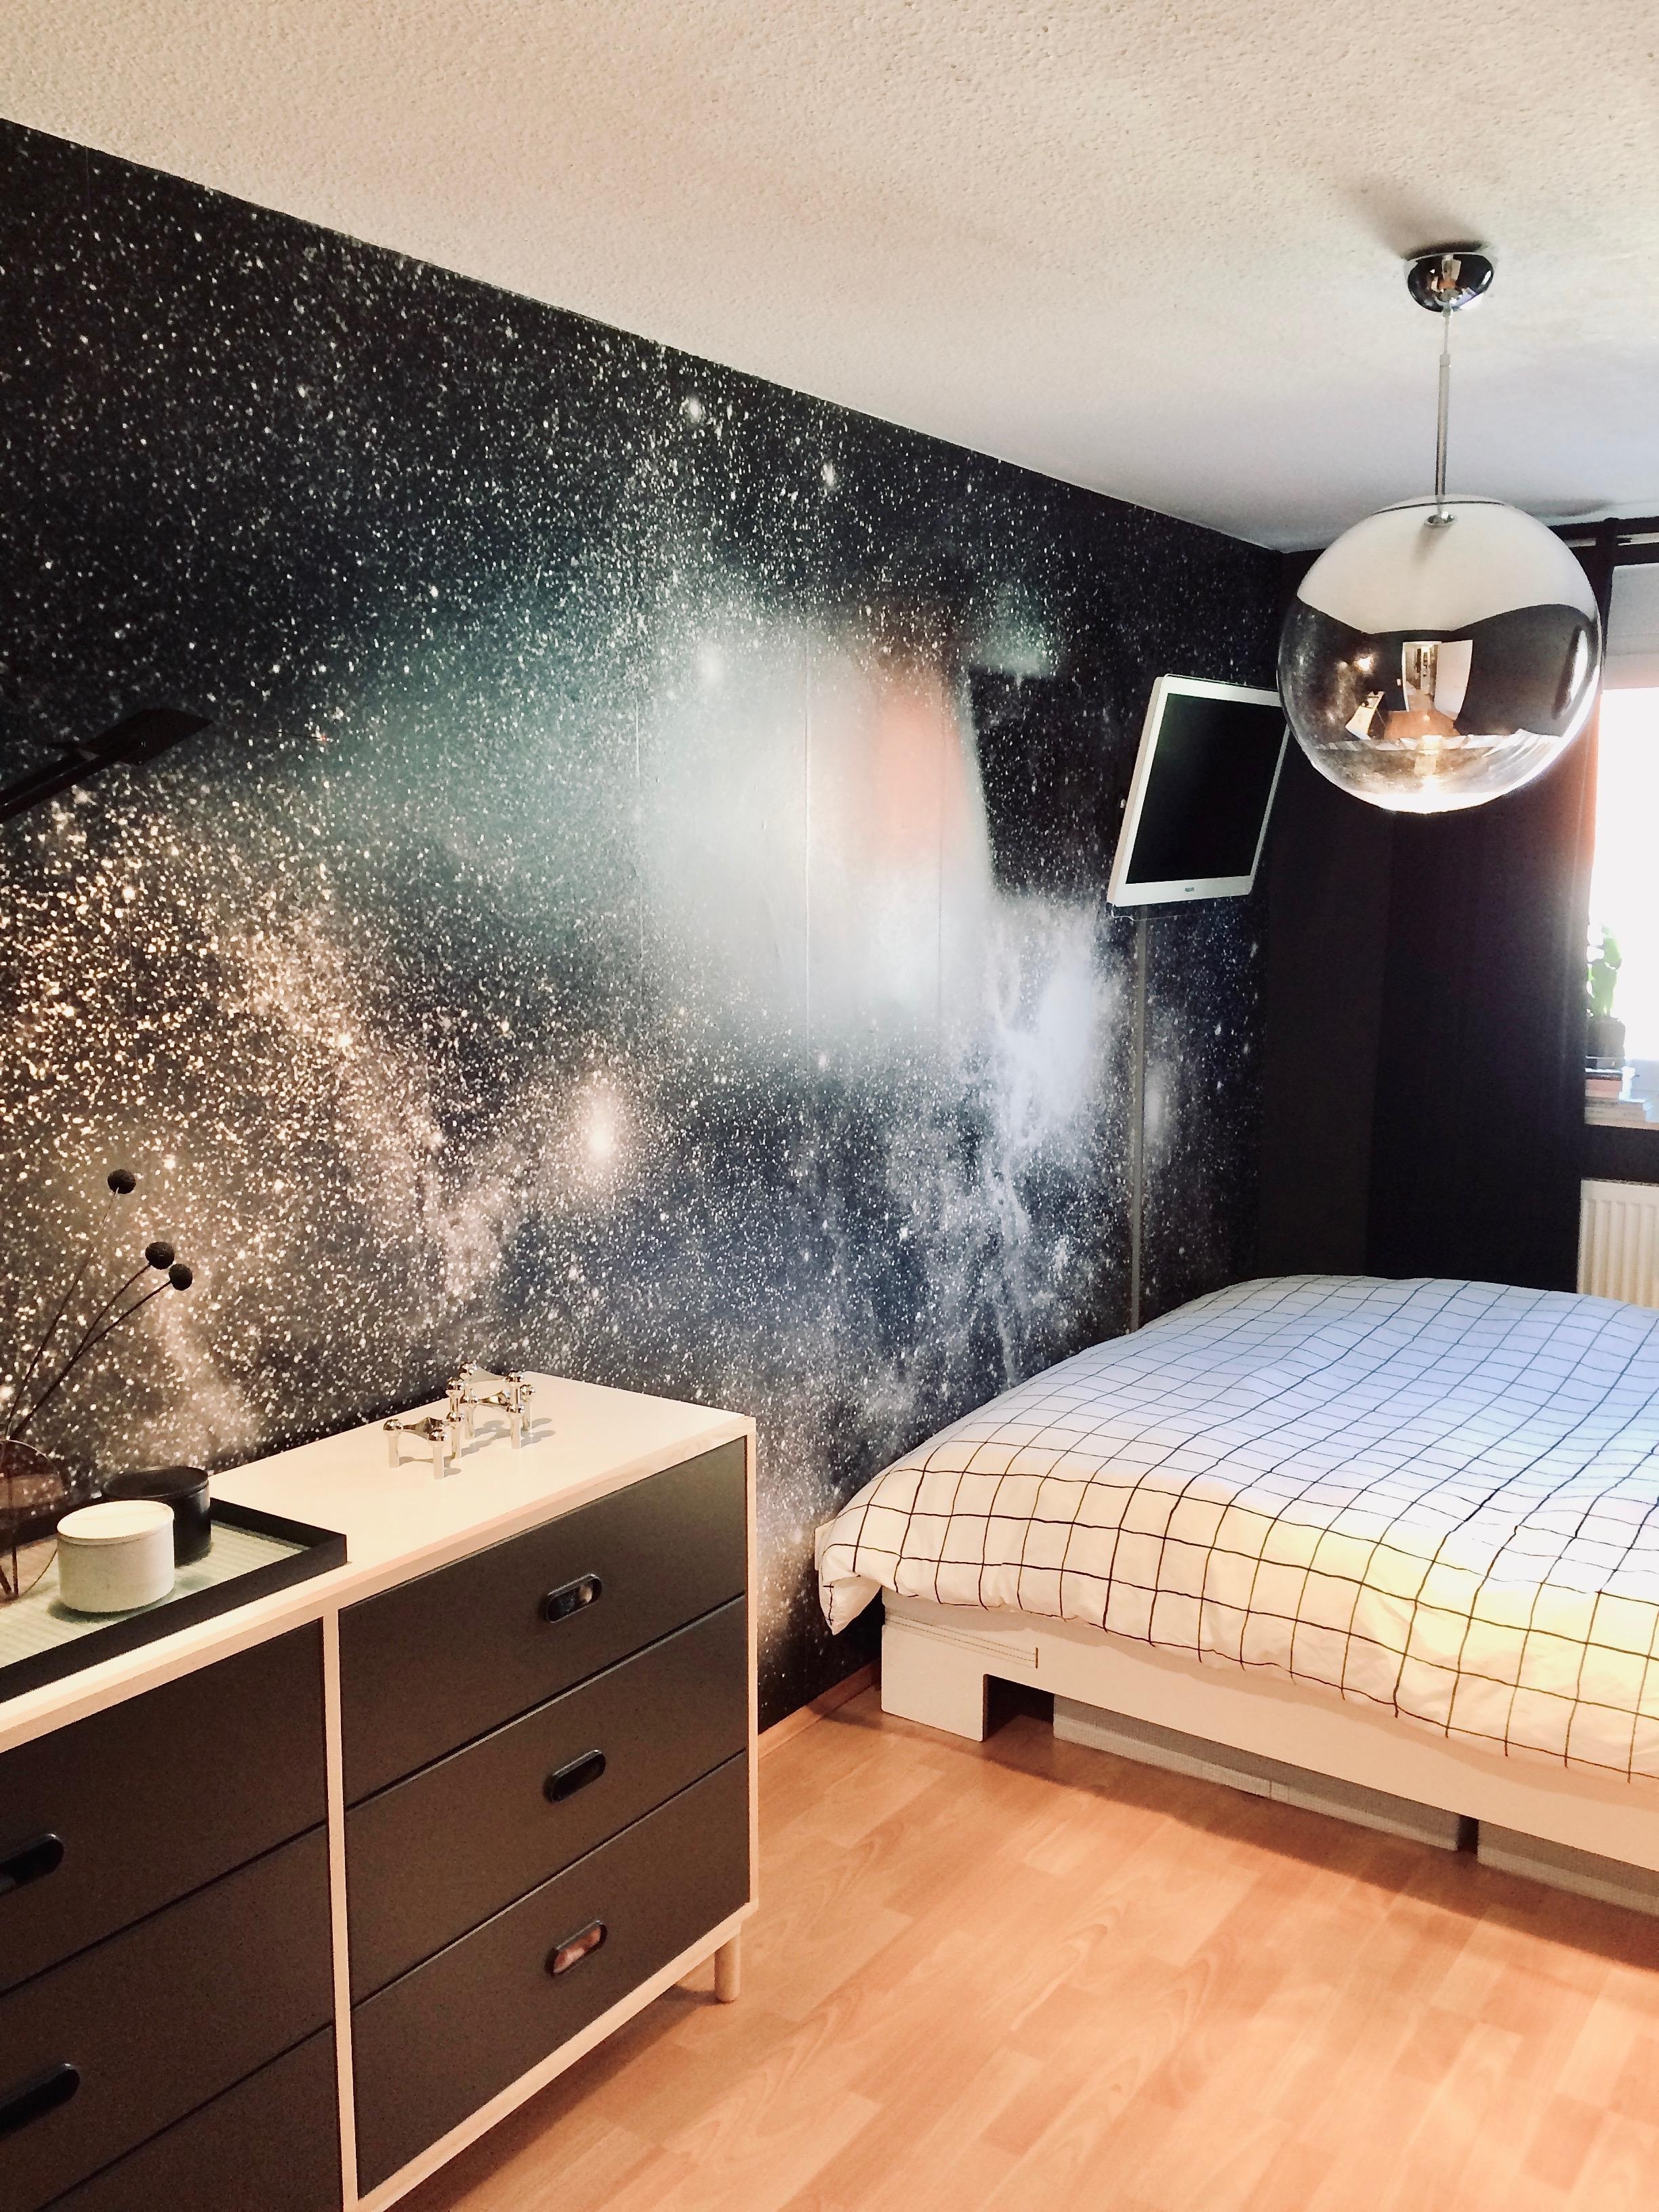 #tinybedroom #hotelroomstyle #mirrorball #moderninteriour #darkskandistyle #blackvelvetcurtains